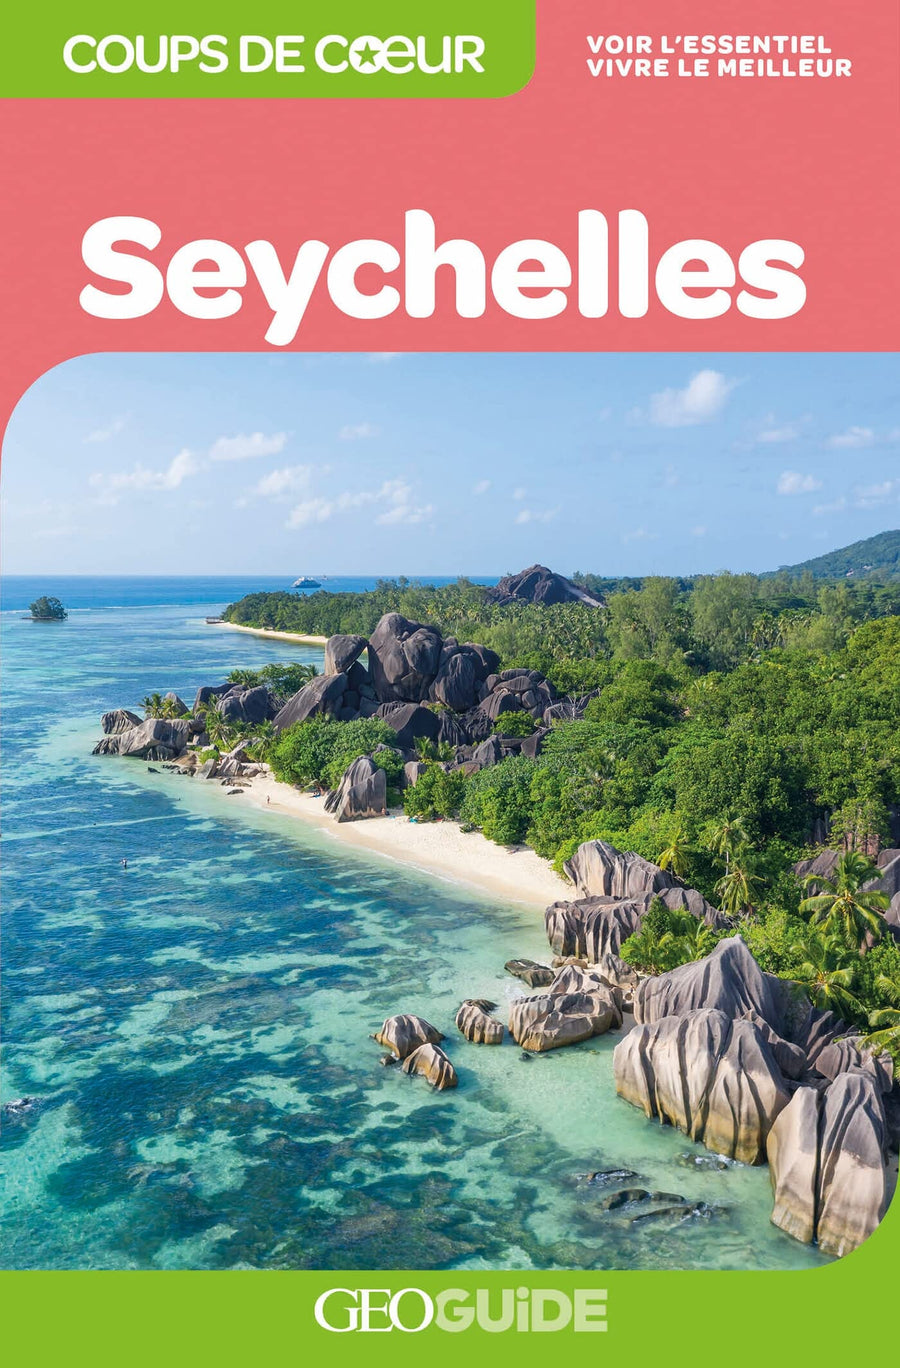 Géoguide (coups de coeur) - Seychelles | Gallimard guide de voyage Gallimard 